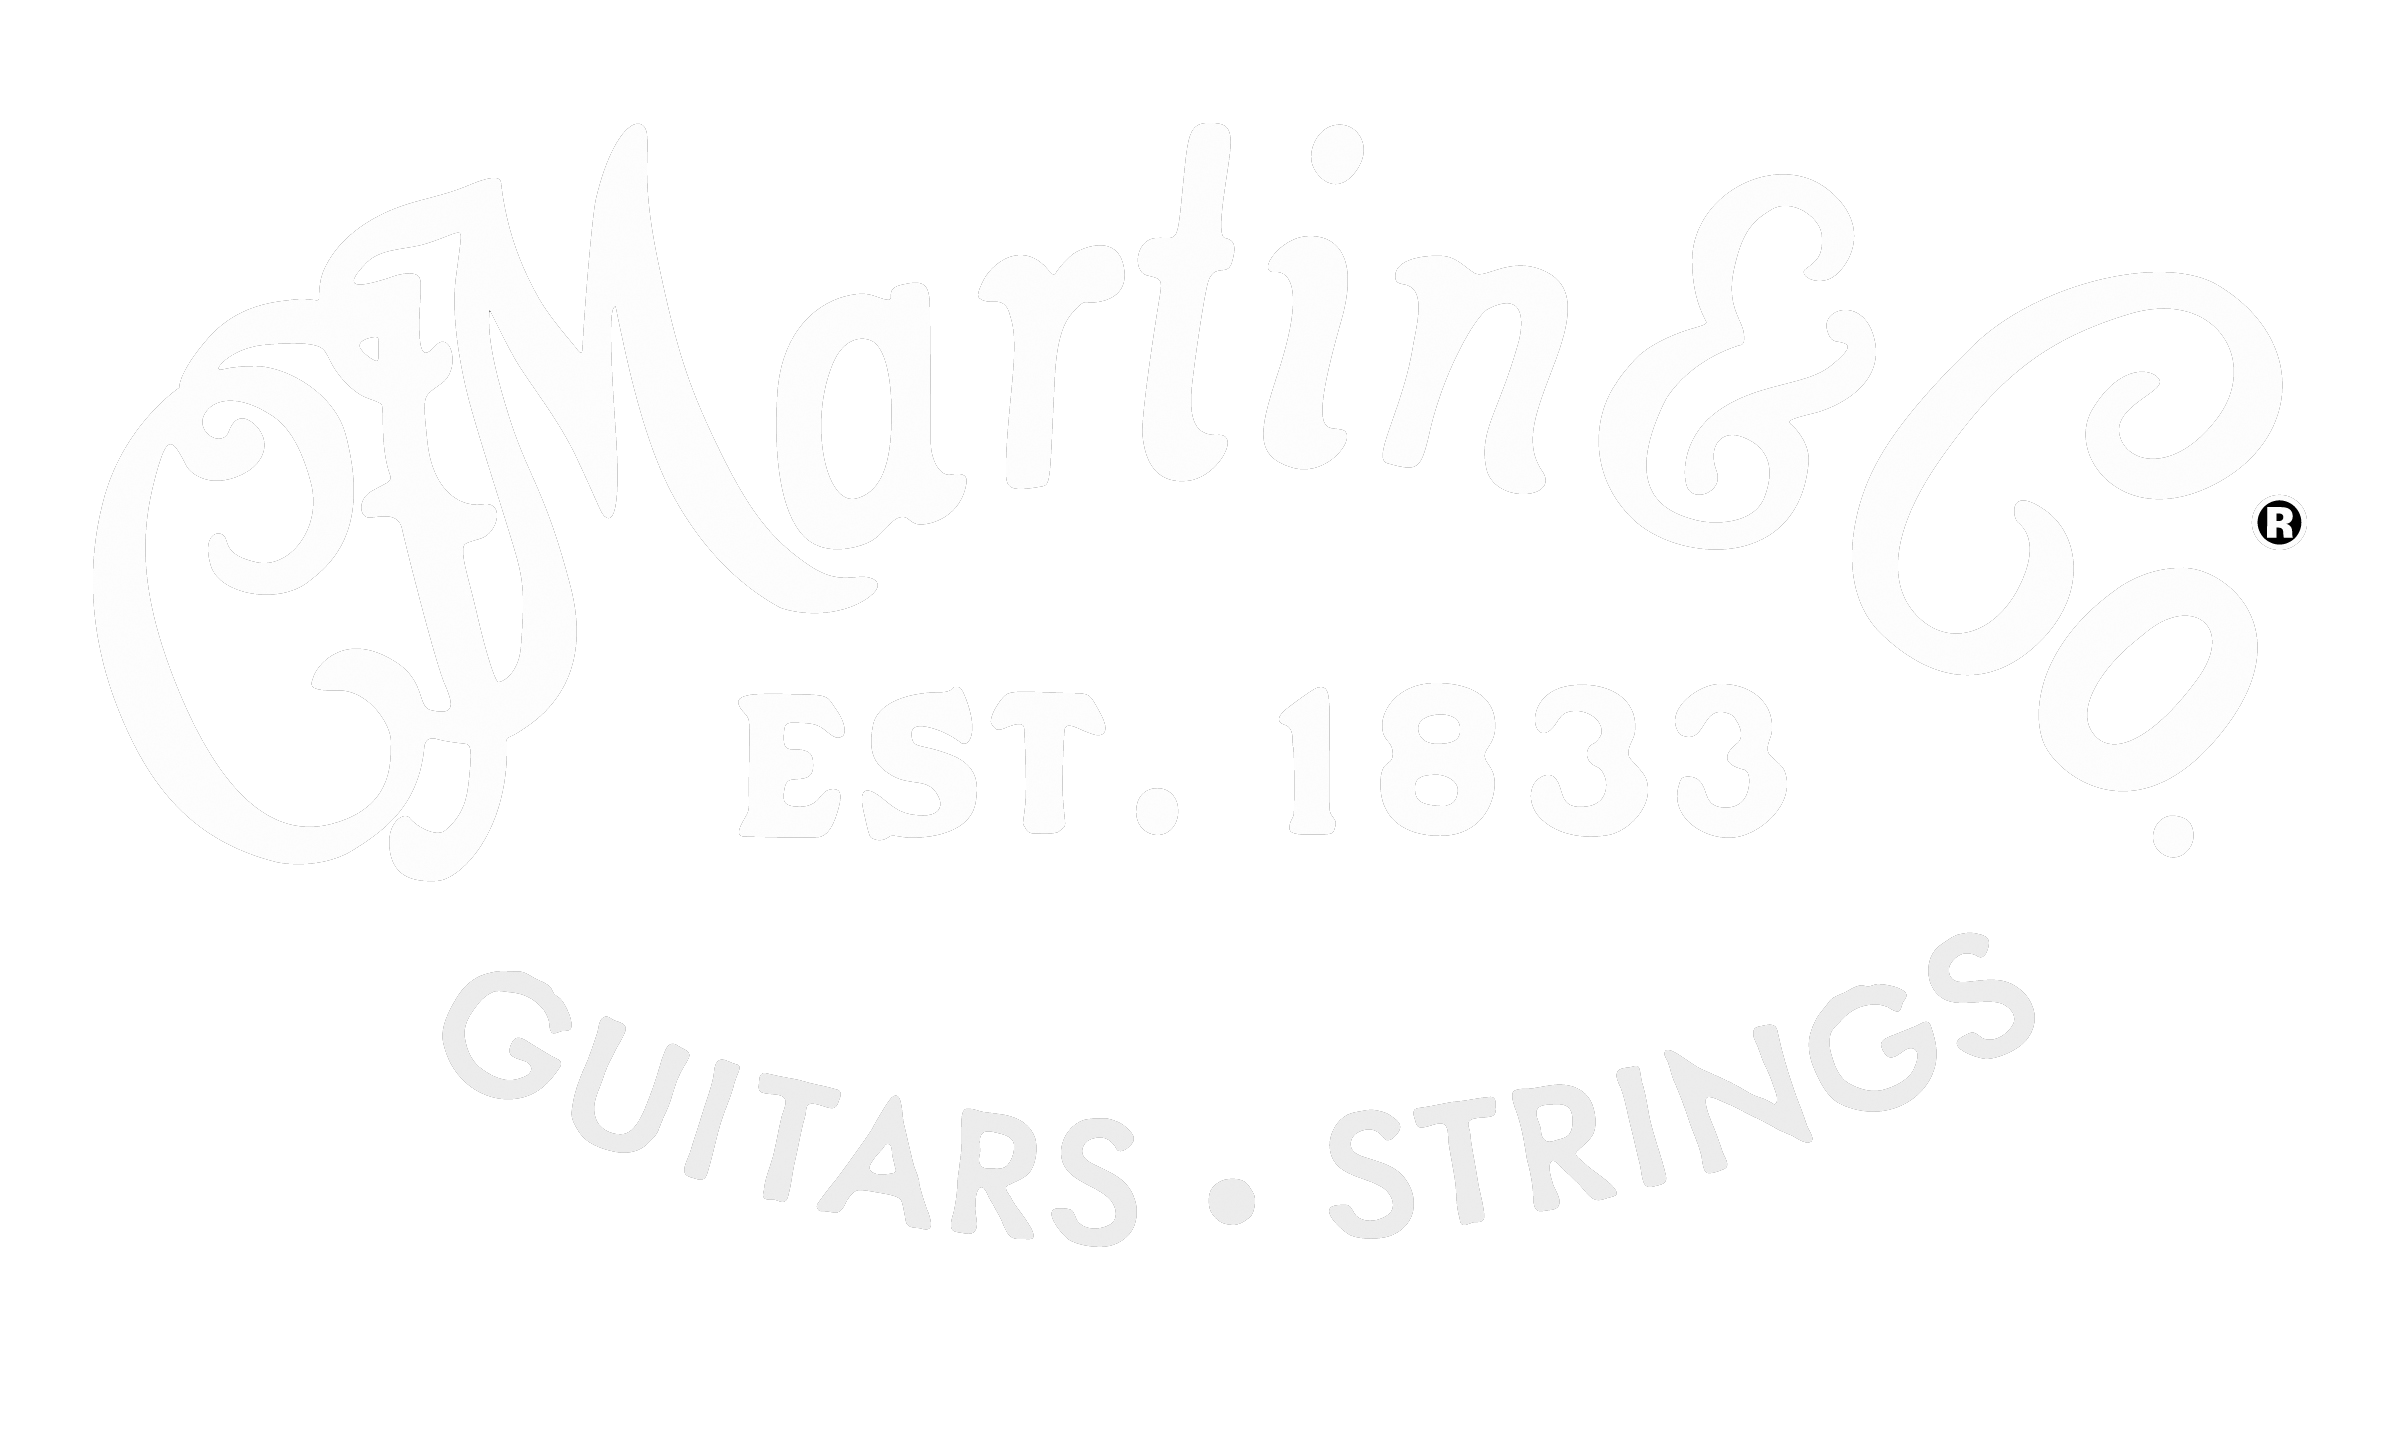 Martin Guitar logo